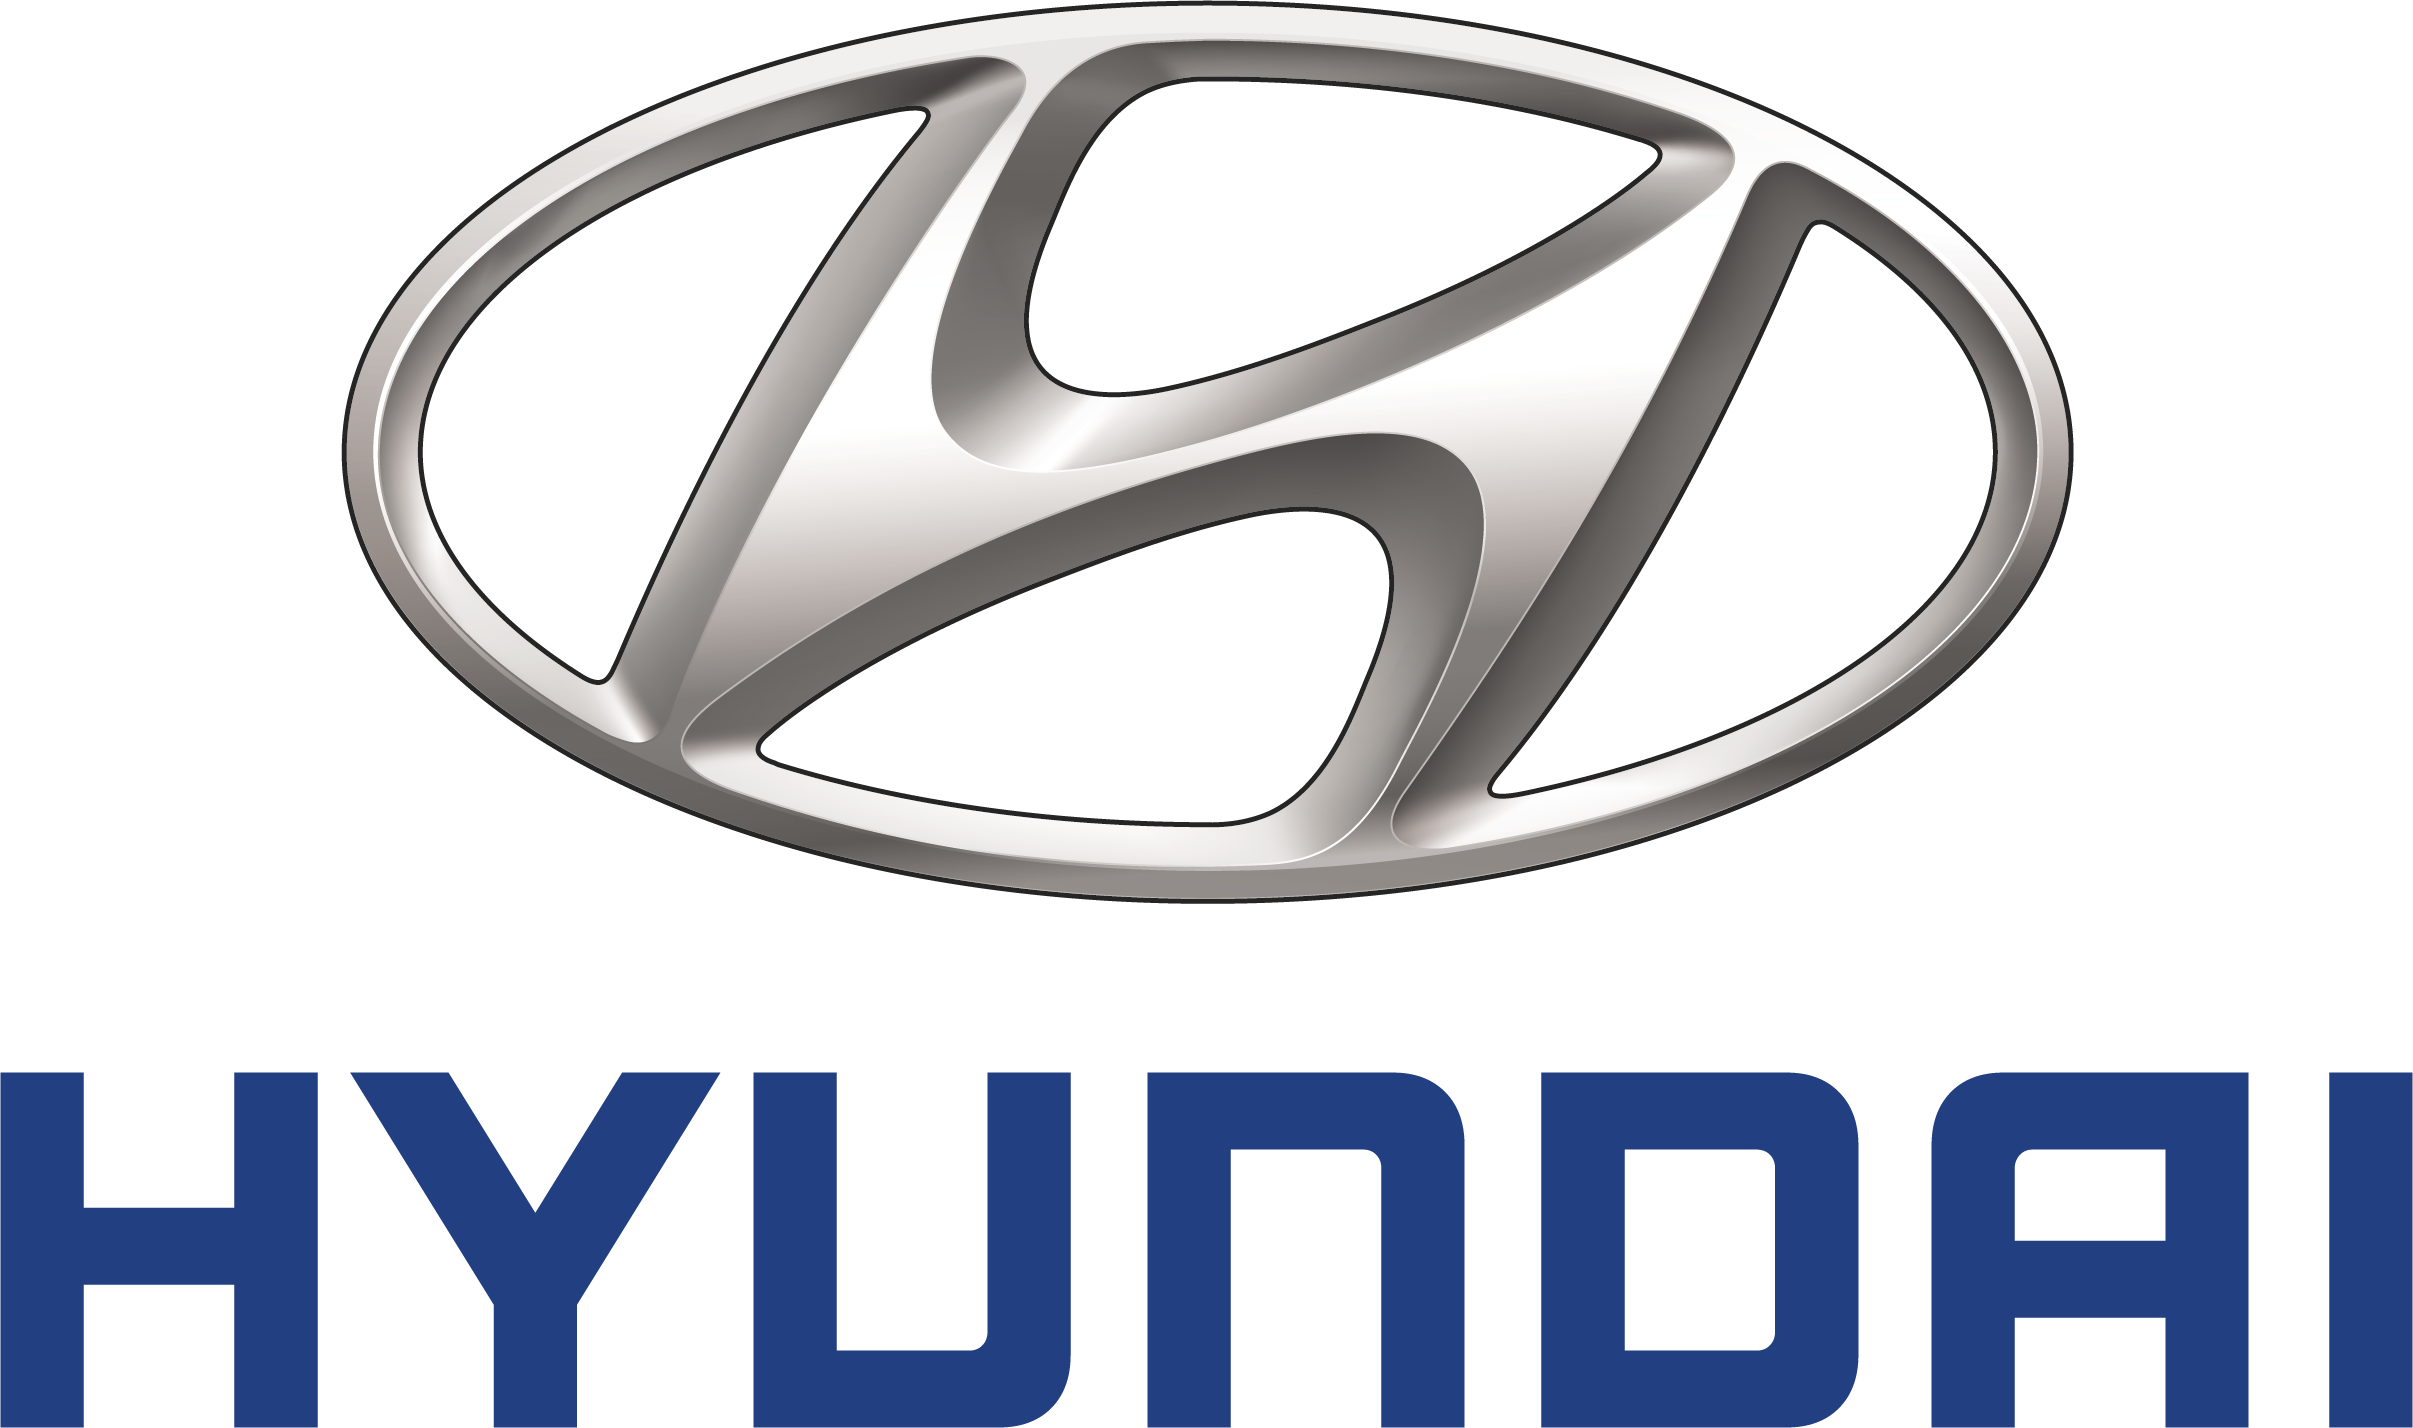 Logo_Hyundai.png